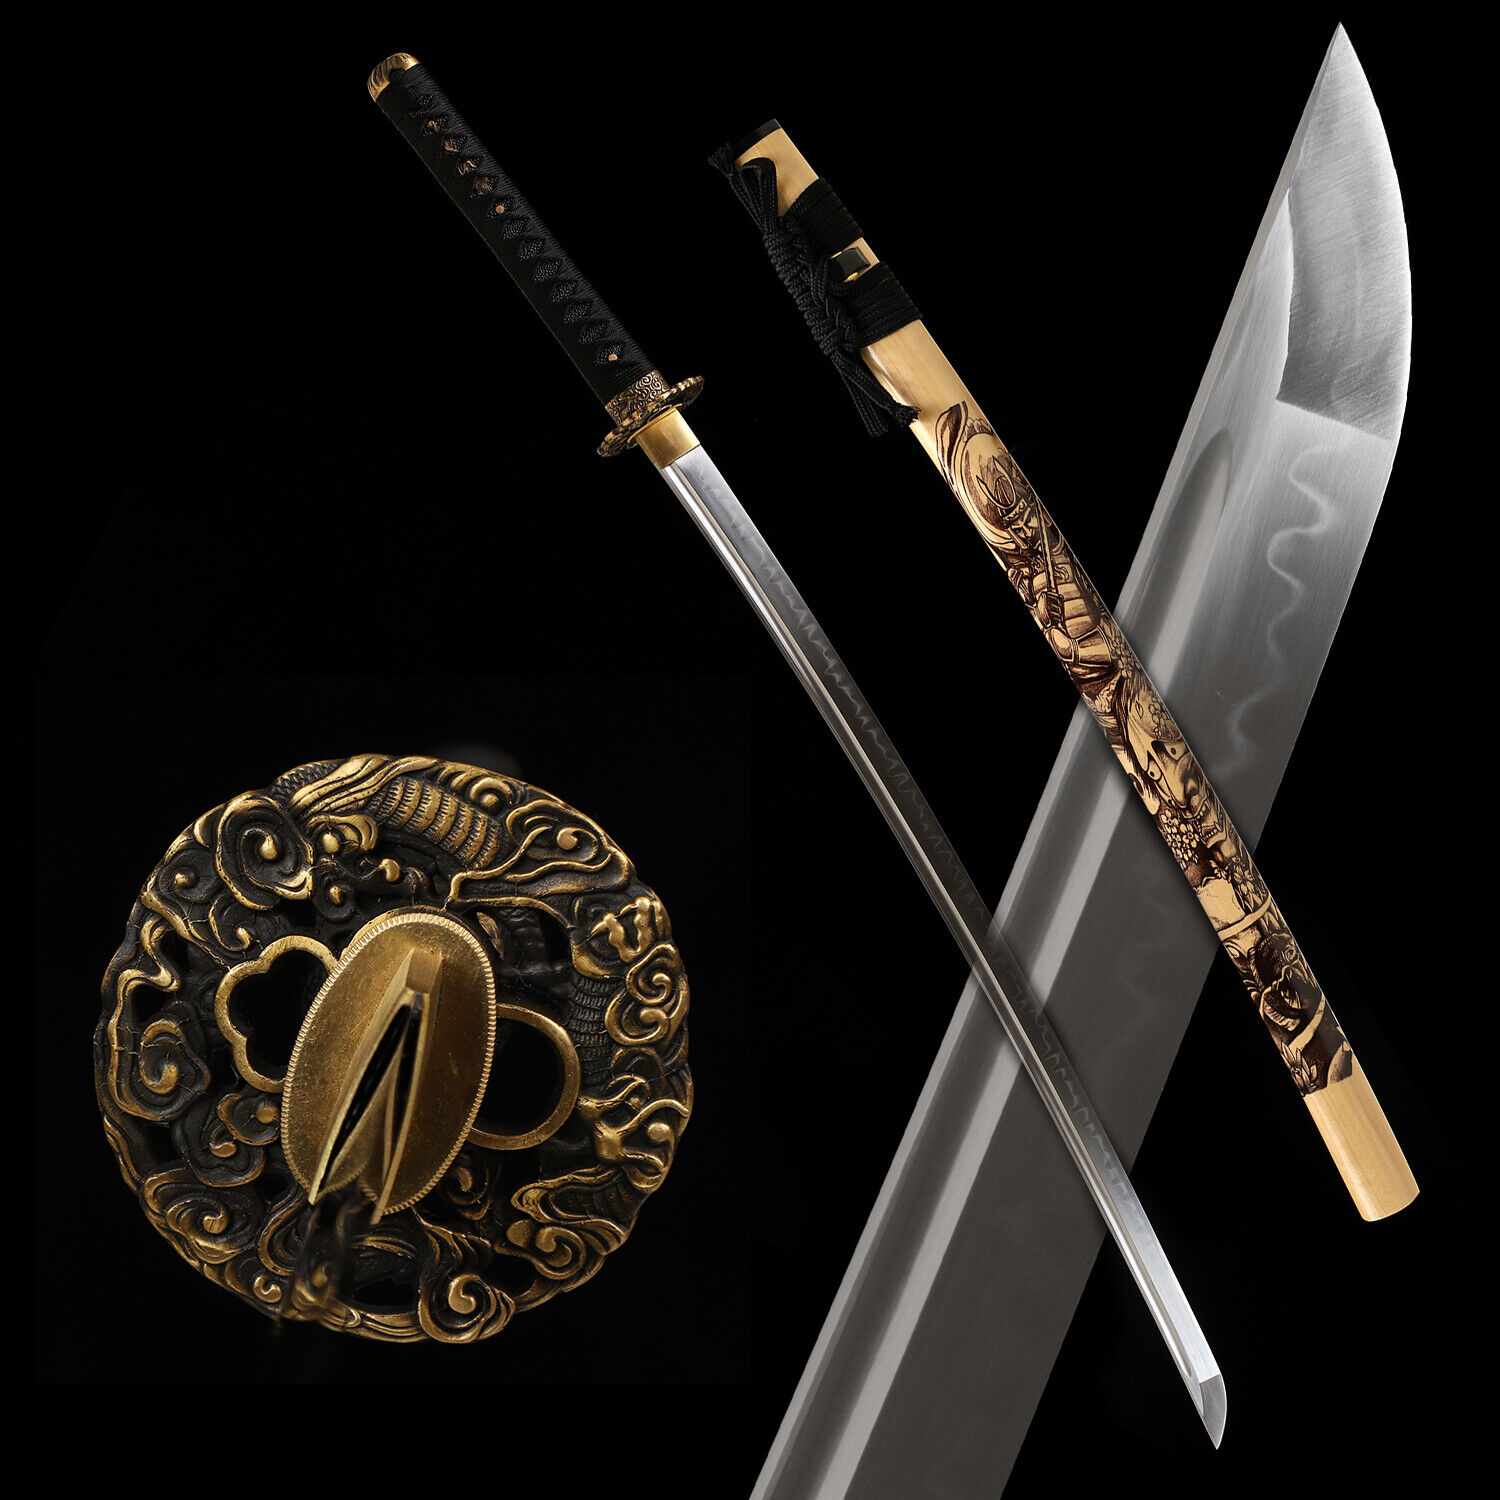 Clay Tempered T10 Steel Katana Real Japanese Samurai Sword Battle Ready Sharp